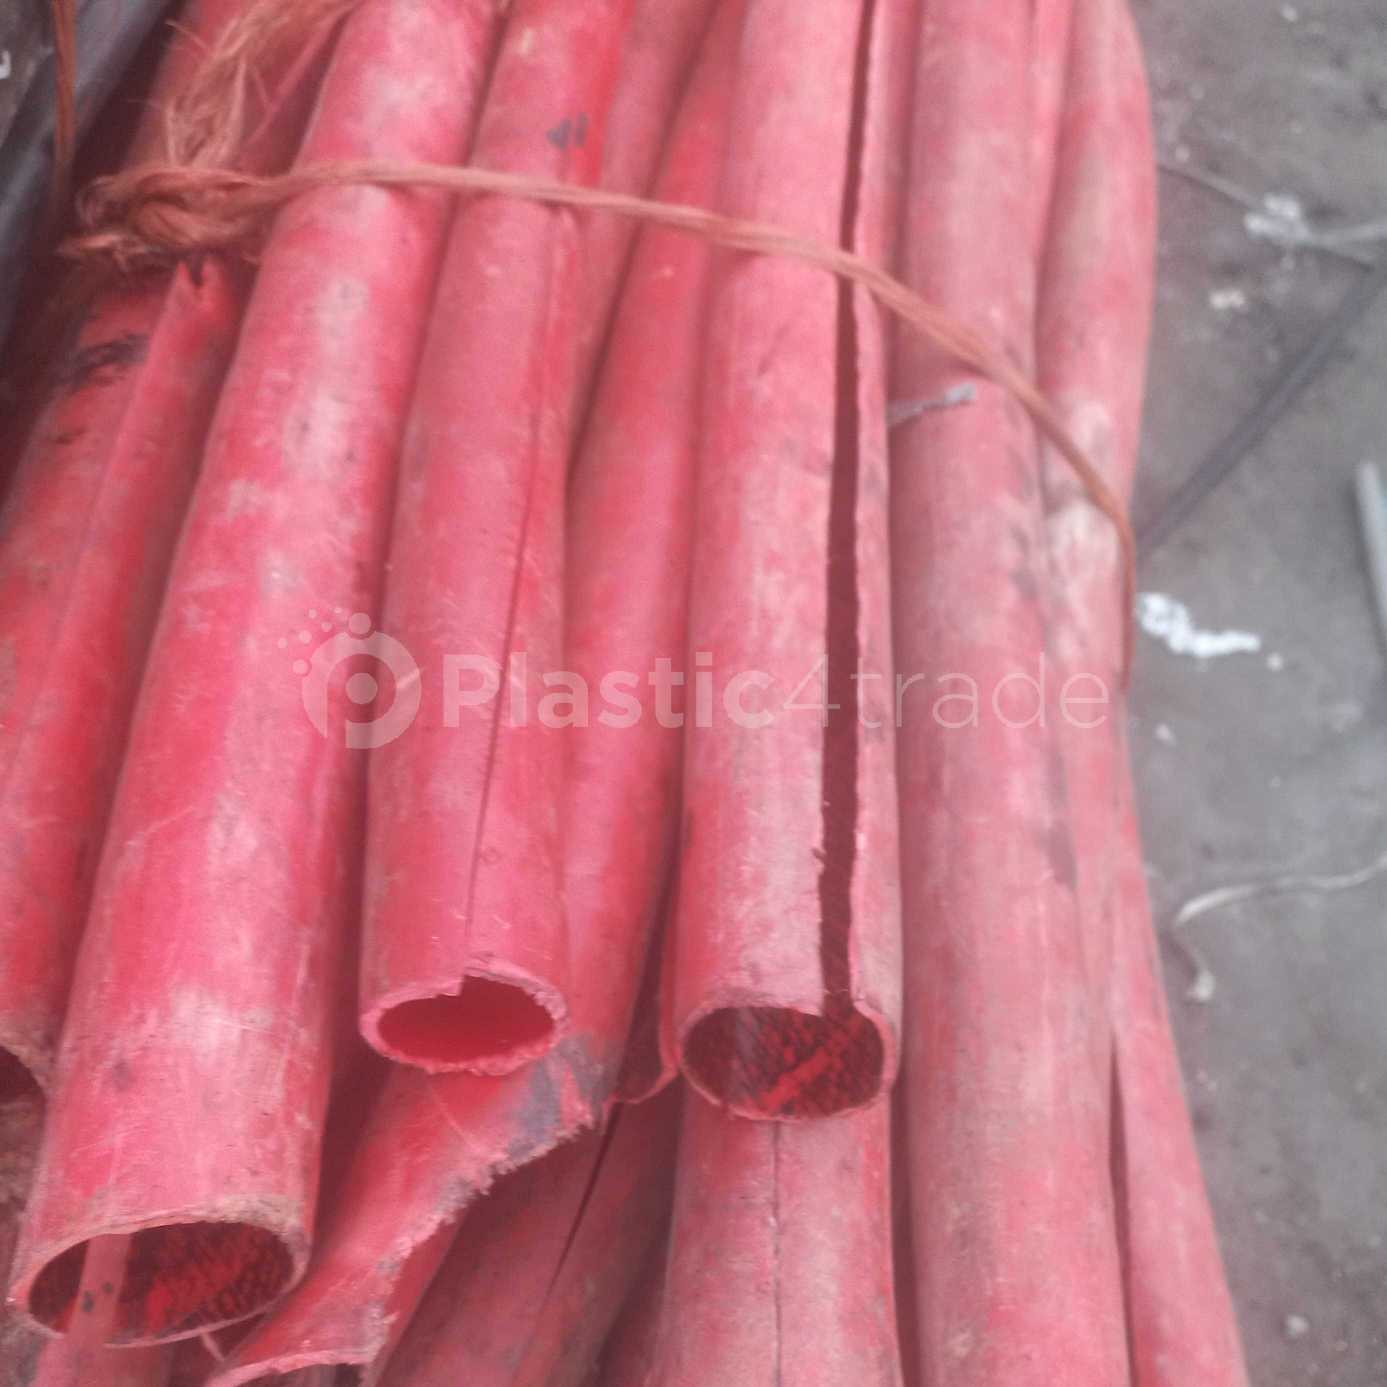 PP DANA AND PVC SWR PIPE PVC Scrap Cable punjab pakistan Plastic4trade